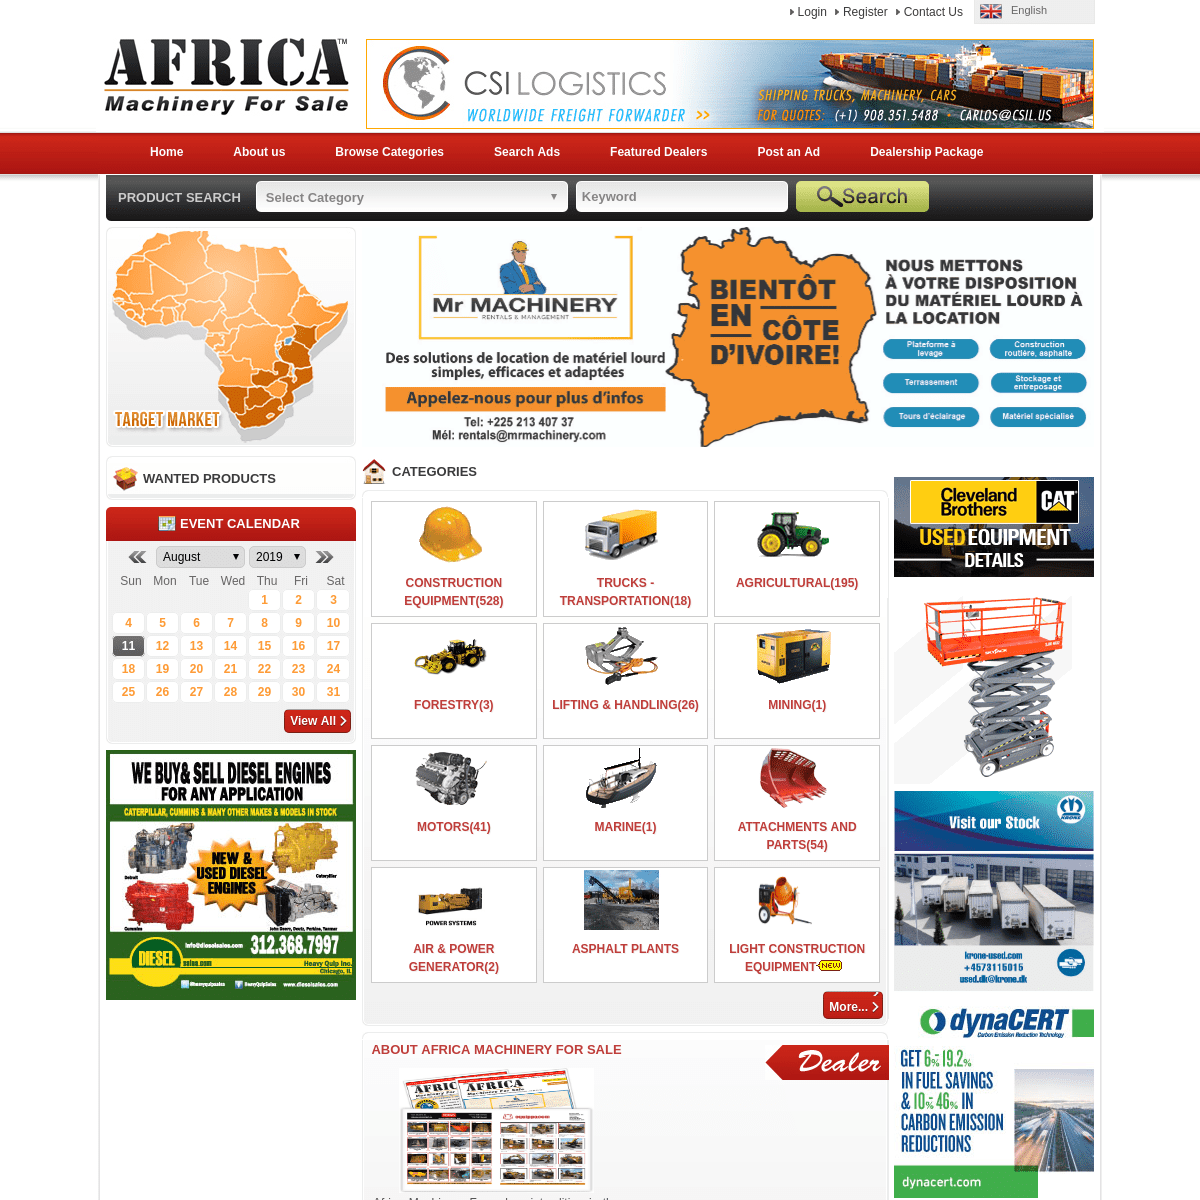 Construction Equipment For Sale for Africa at AfricaMachineryForSale.com: Track Dozers, Scrapers, Wheel Loaders, Excavators, Mot